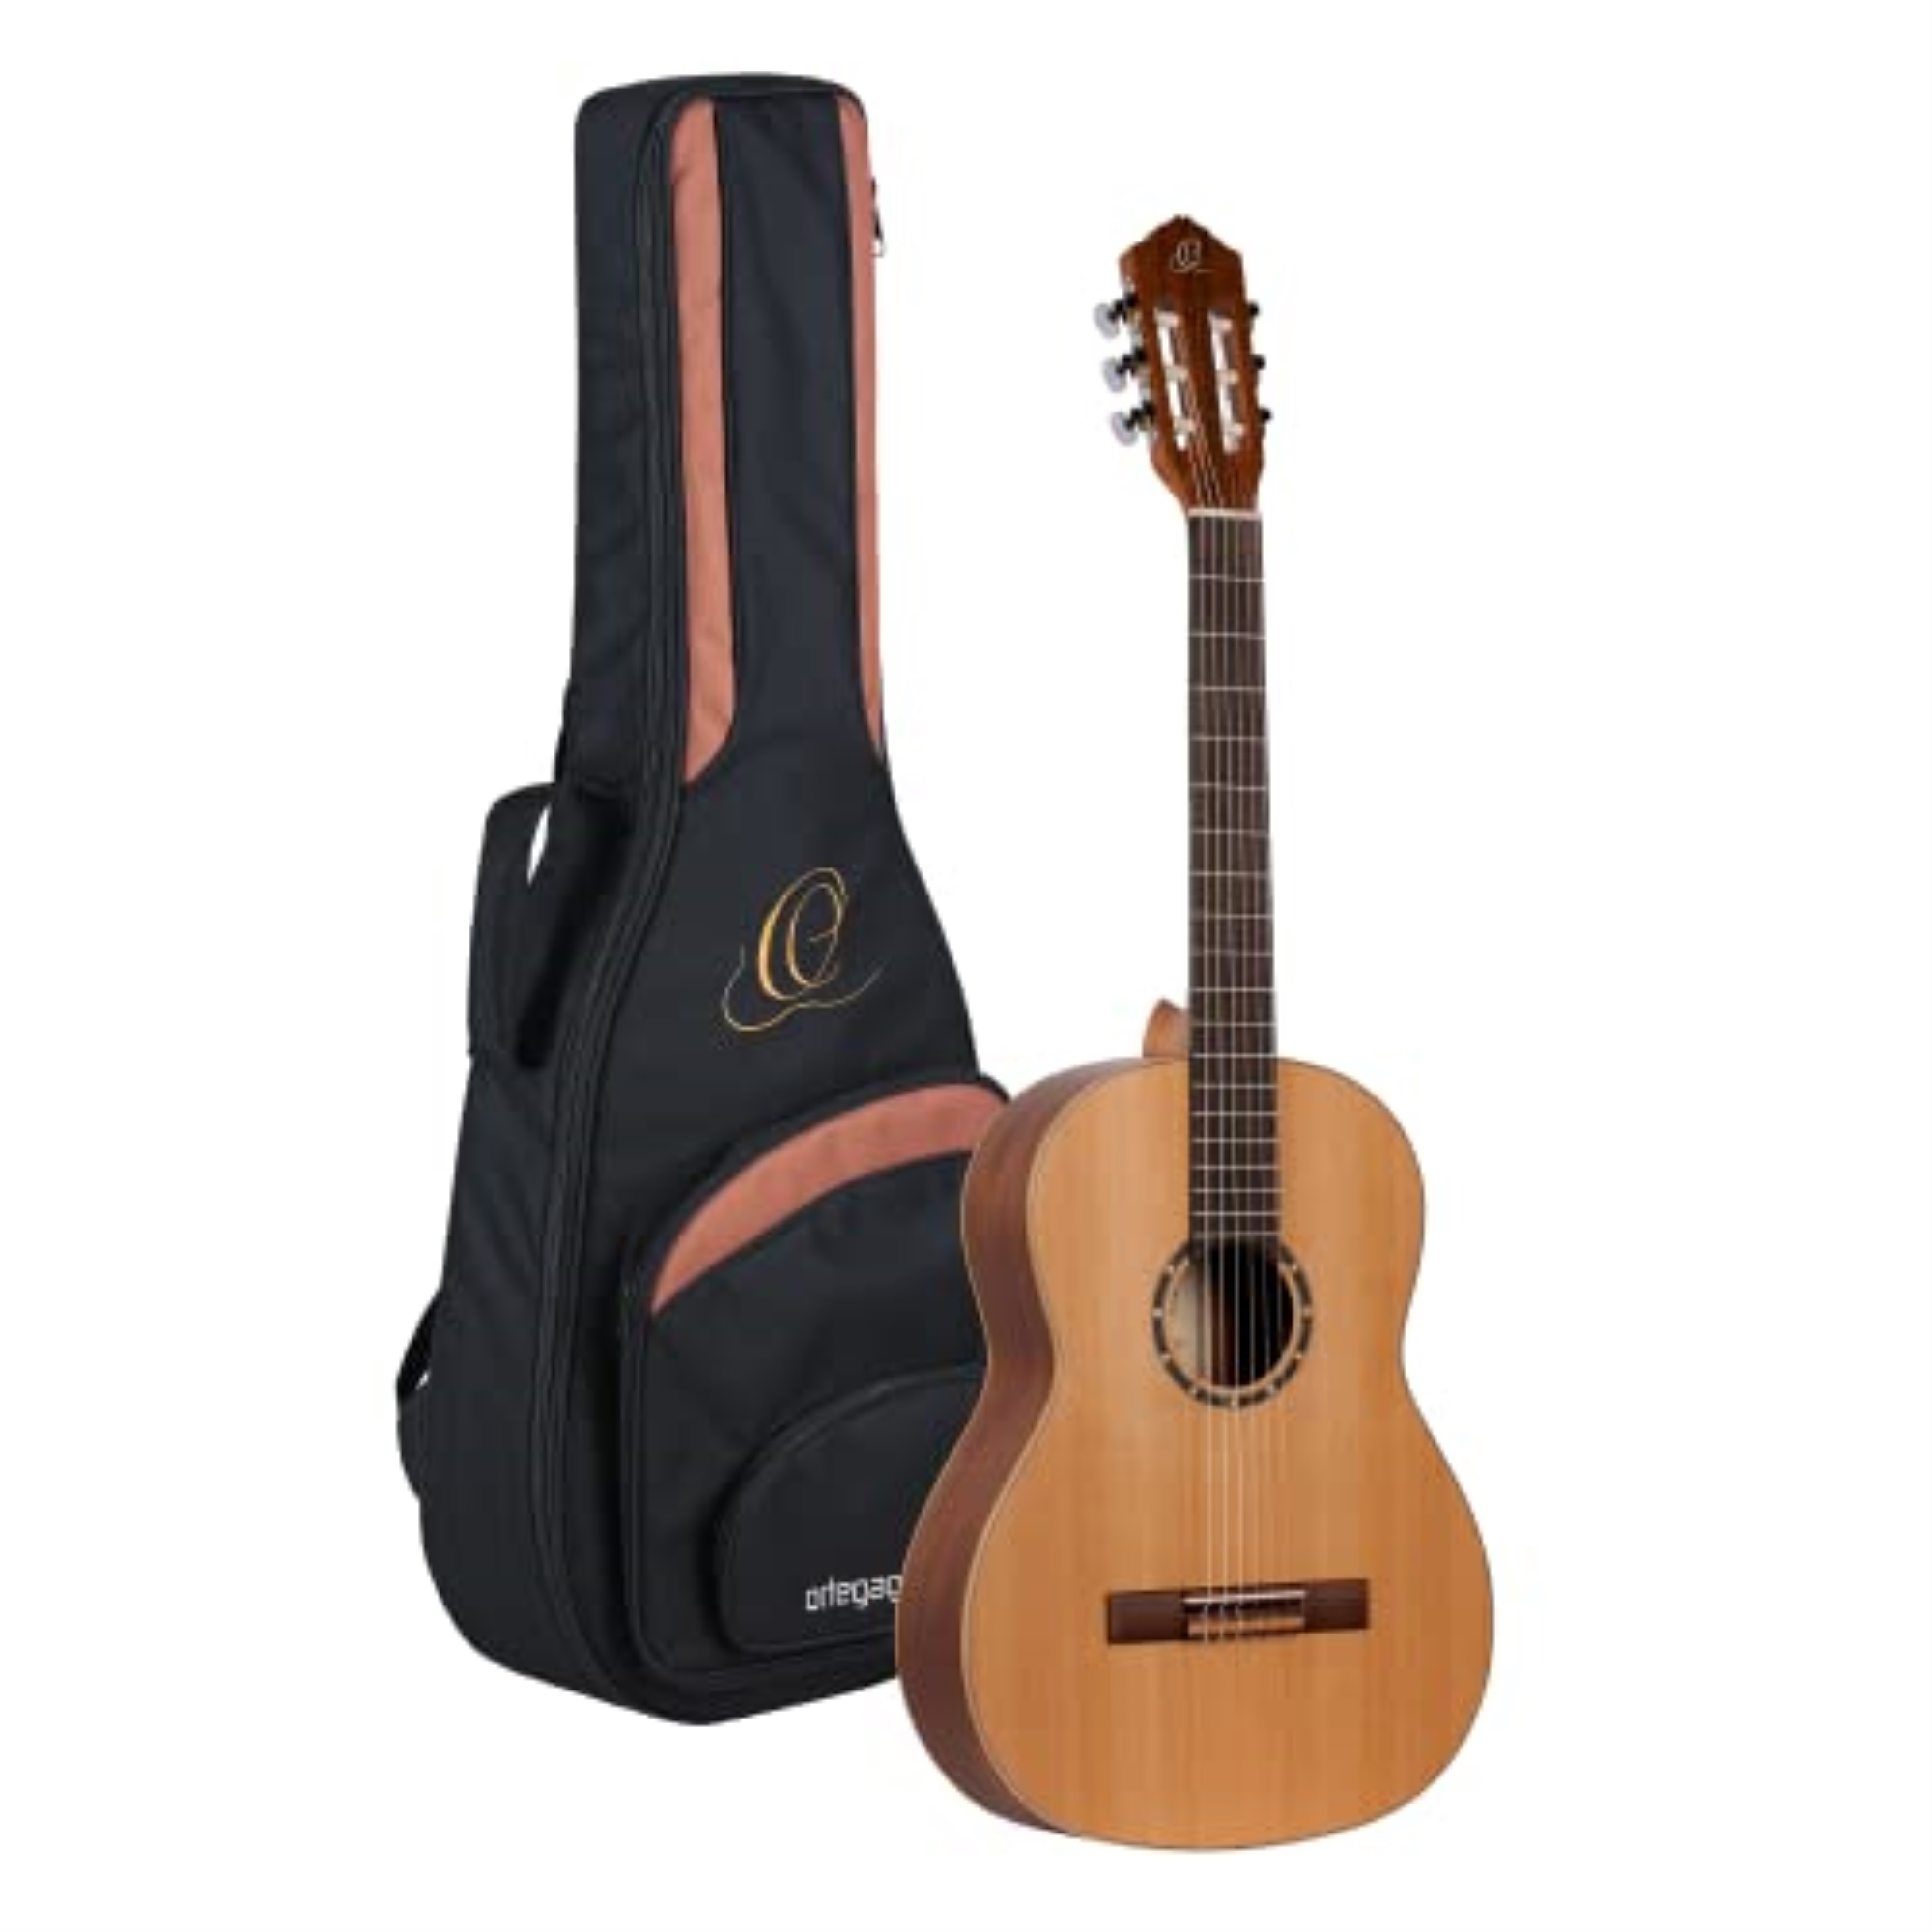 Ortega Guitars Family Series Full Size Slim Neck Nylon String Classical Guitar with Bag